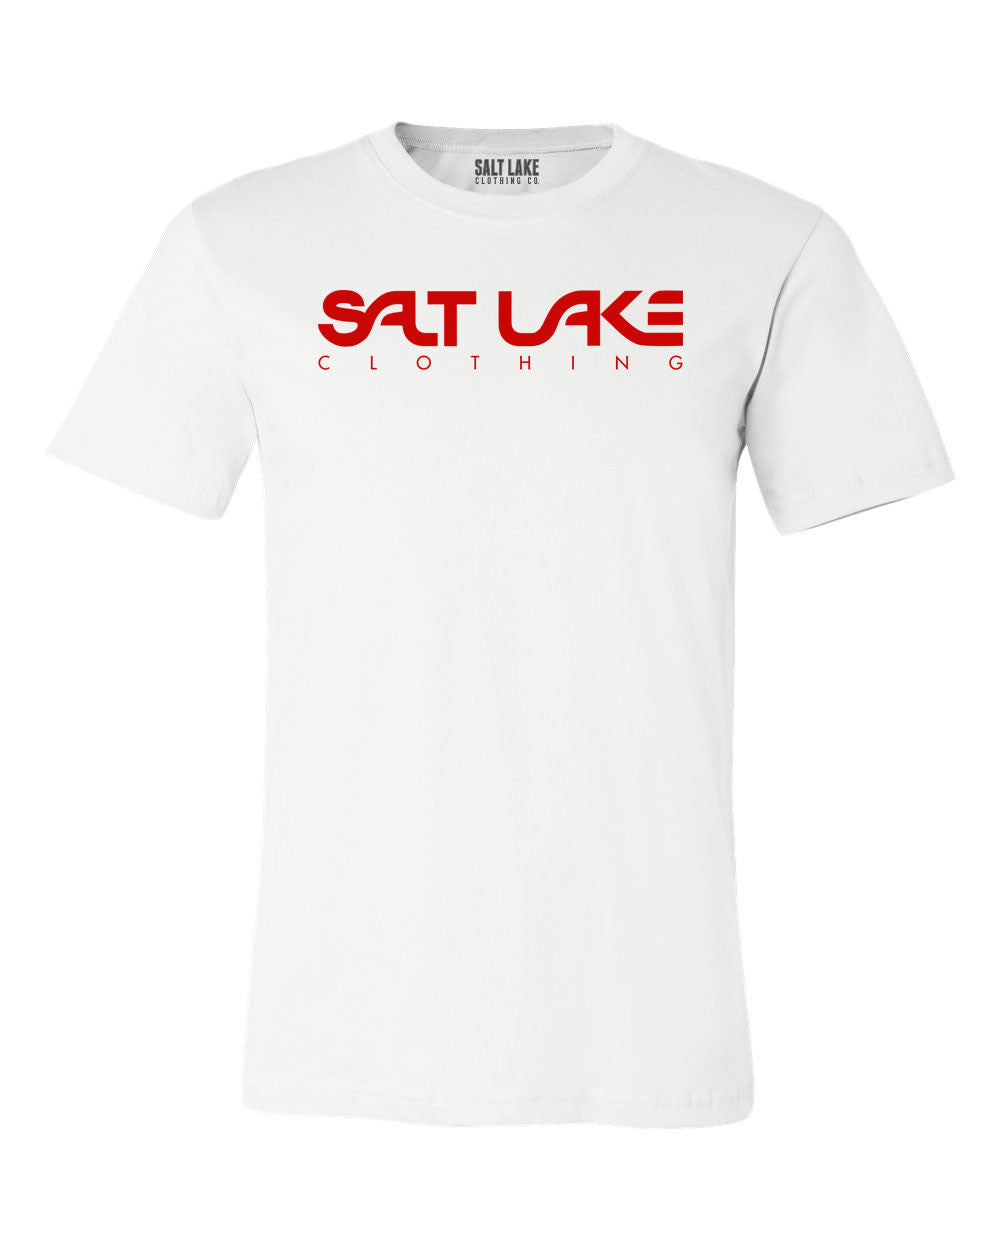 Salt Lake Clothing T-shirt